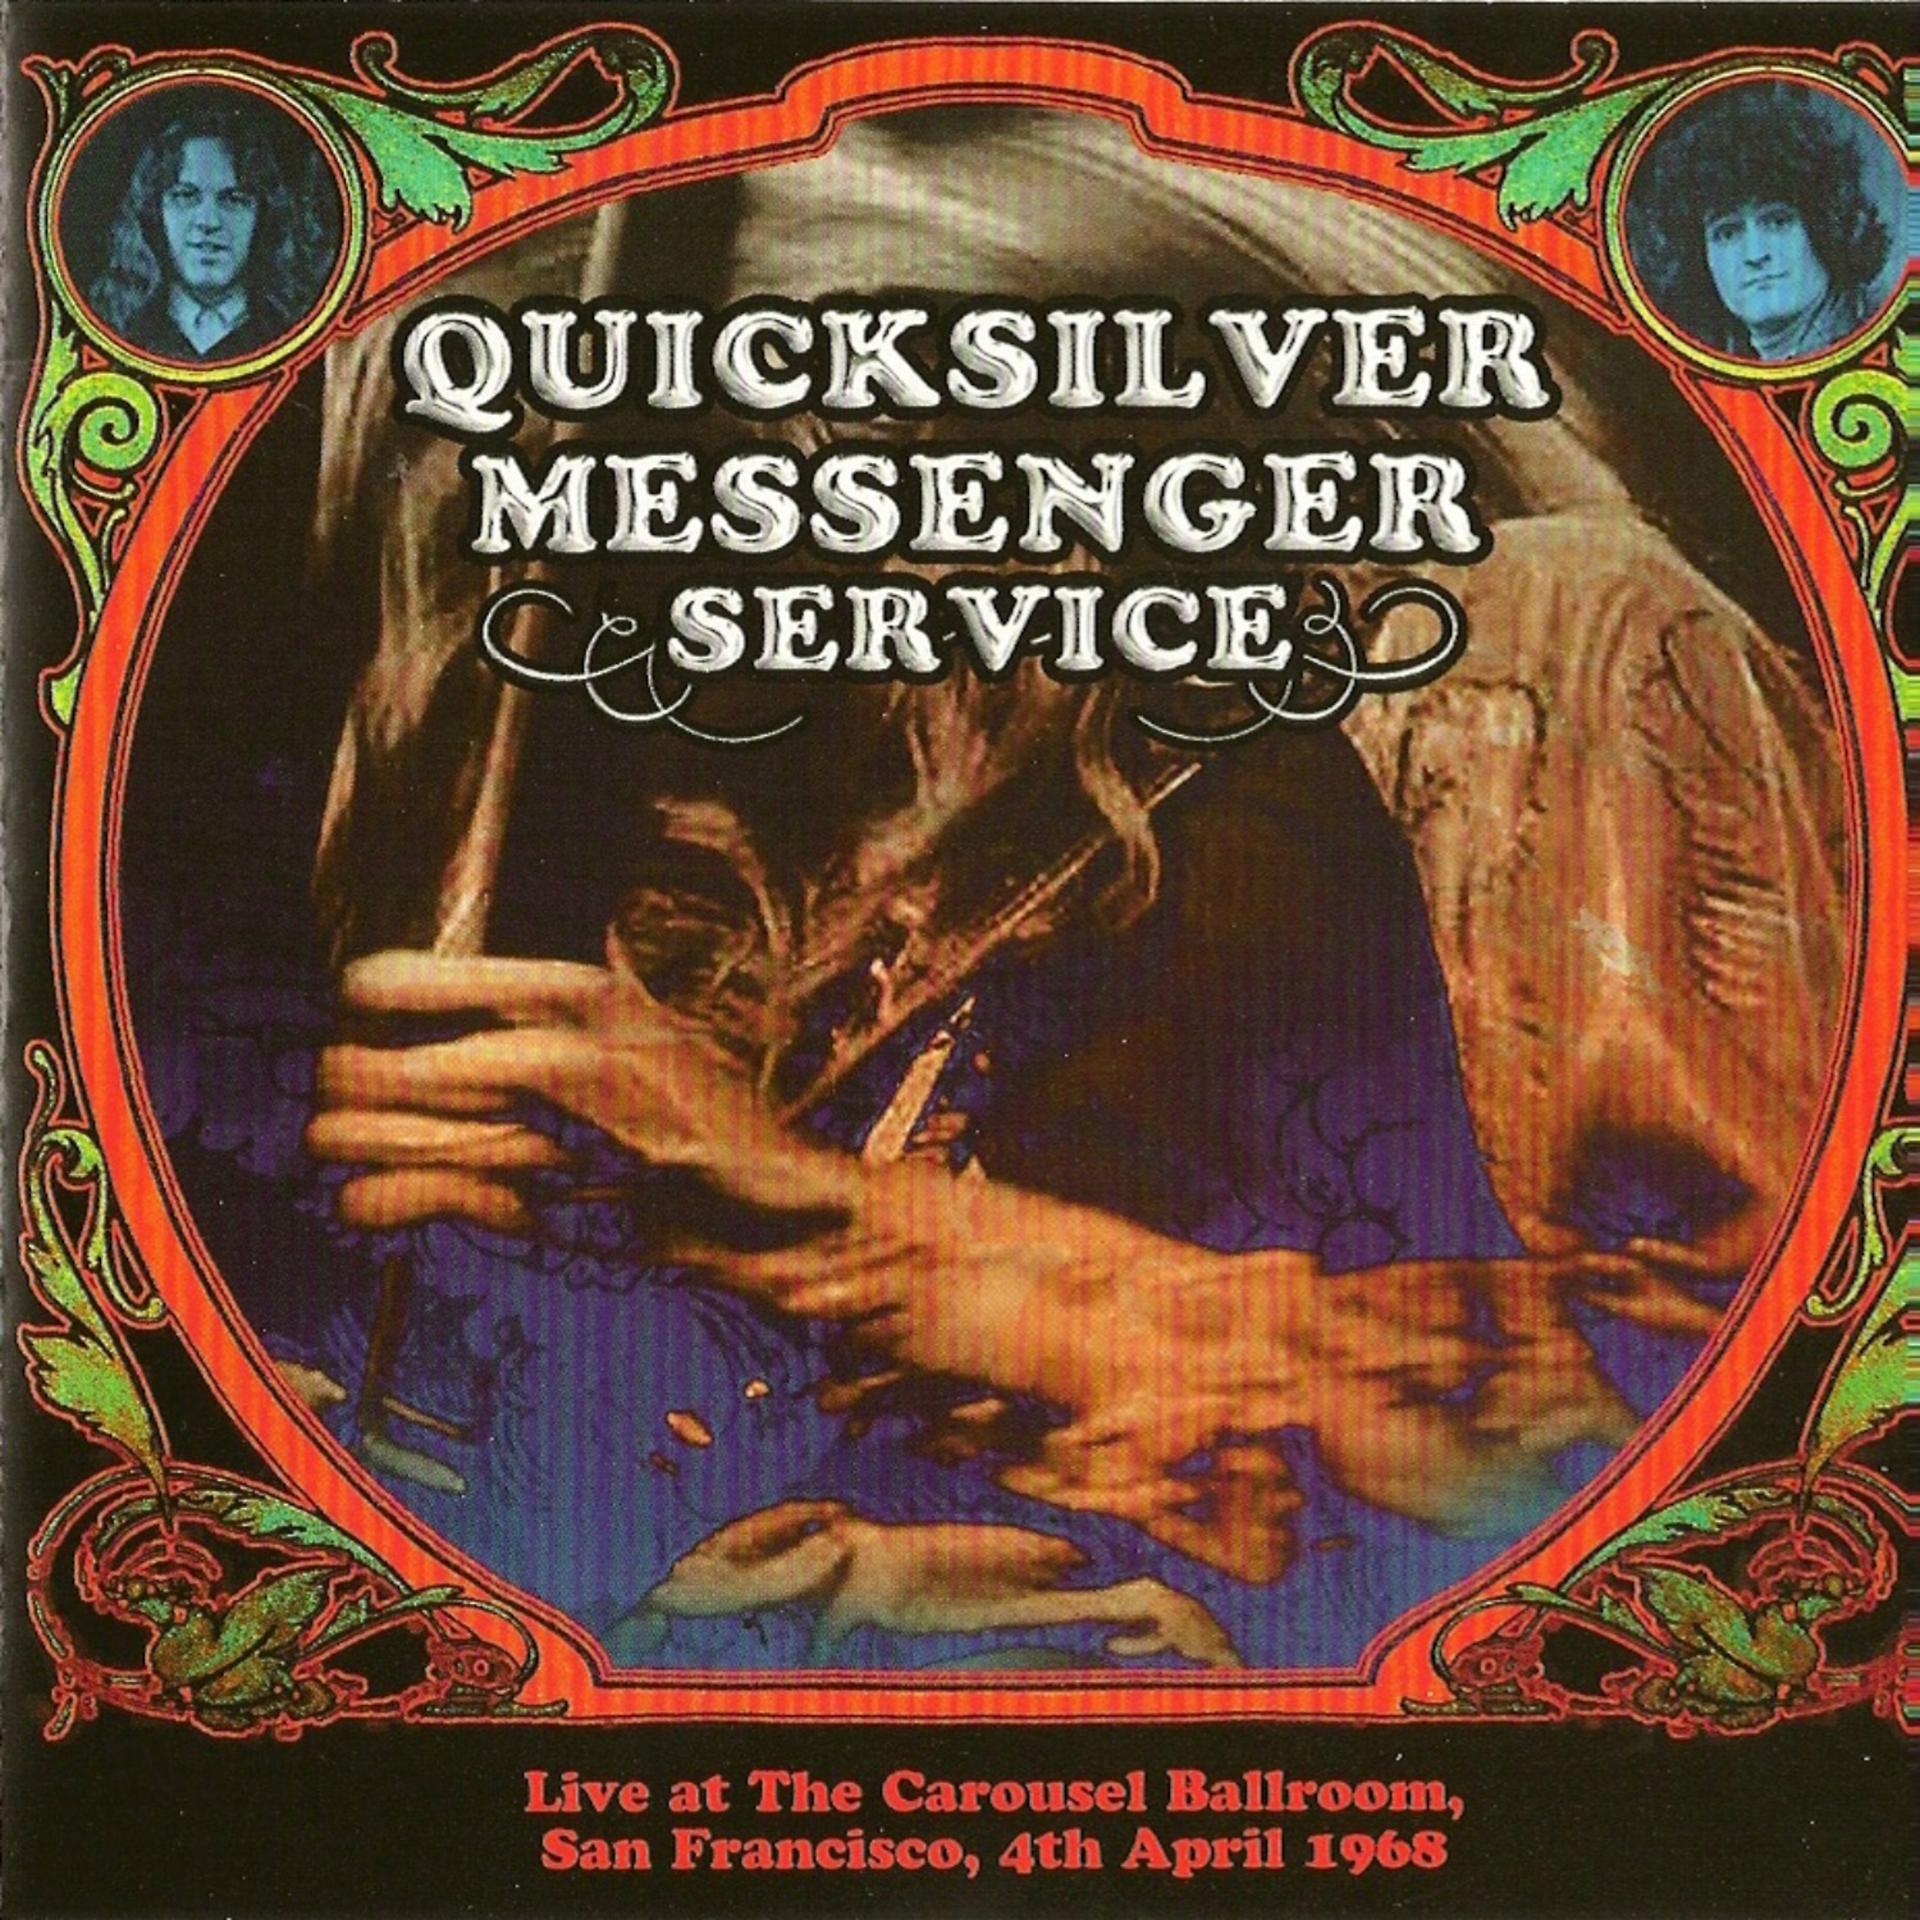 Quicksilver messenger service. Quicksilver Messenger service 1968. Messenger service. At the Carousel Ballroom, April 24 1968 CD Covers.